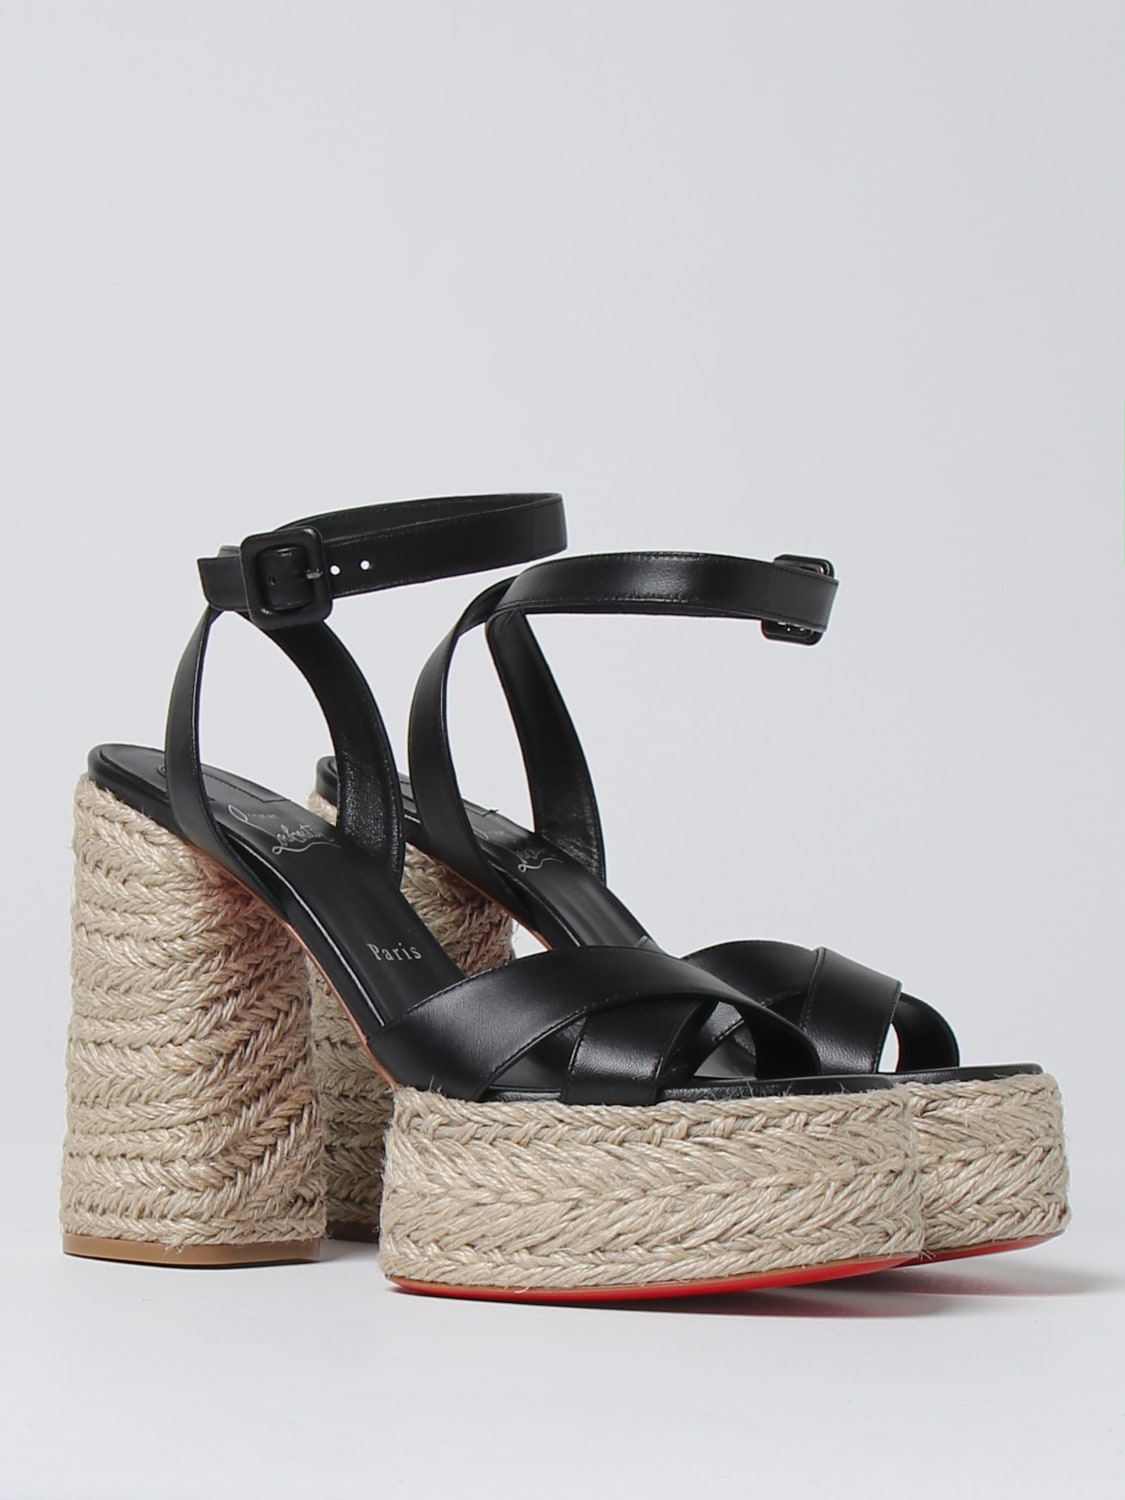 Christian Louboutin Summer Mariza sandals for Women - Black in Oman